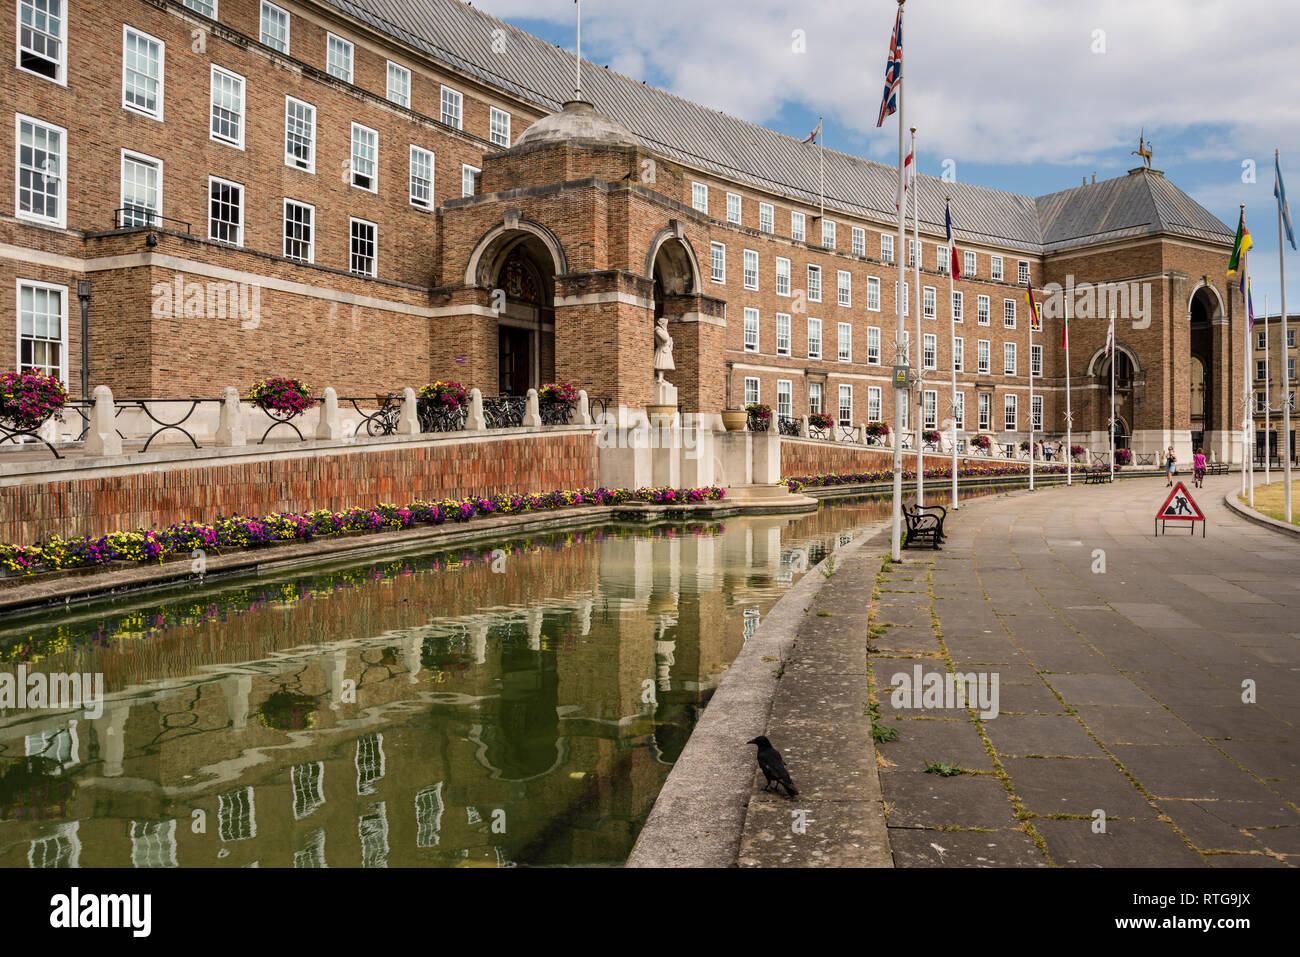 British City Council on College Green, Bristol, UK Stock Photo